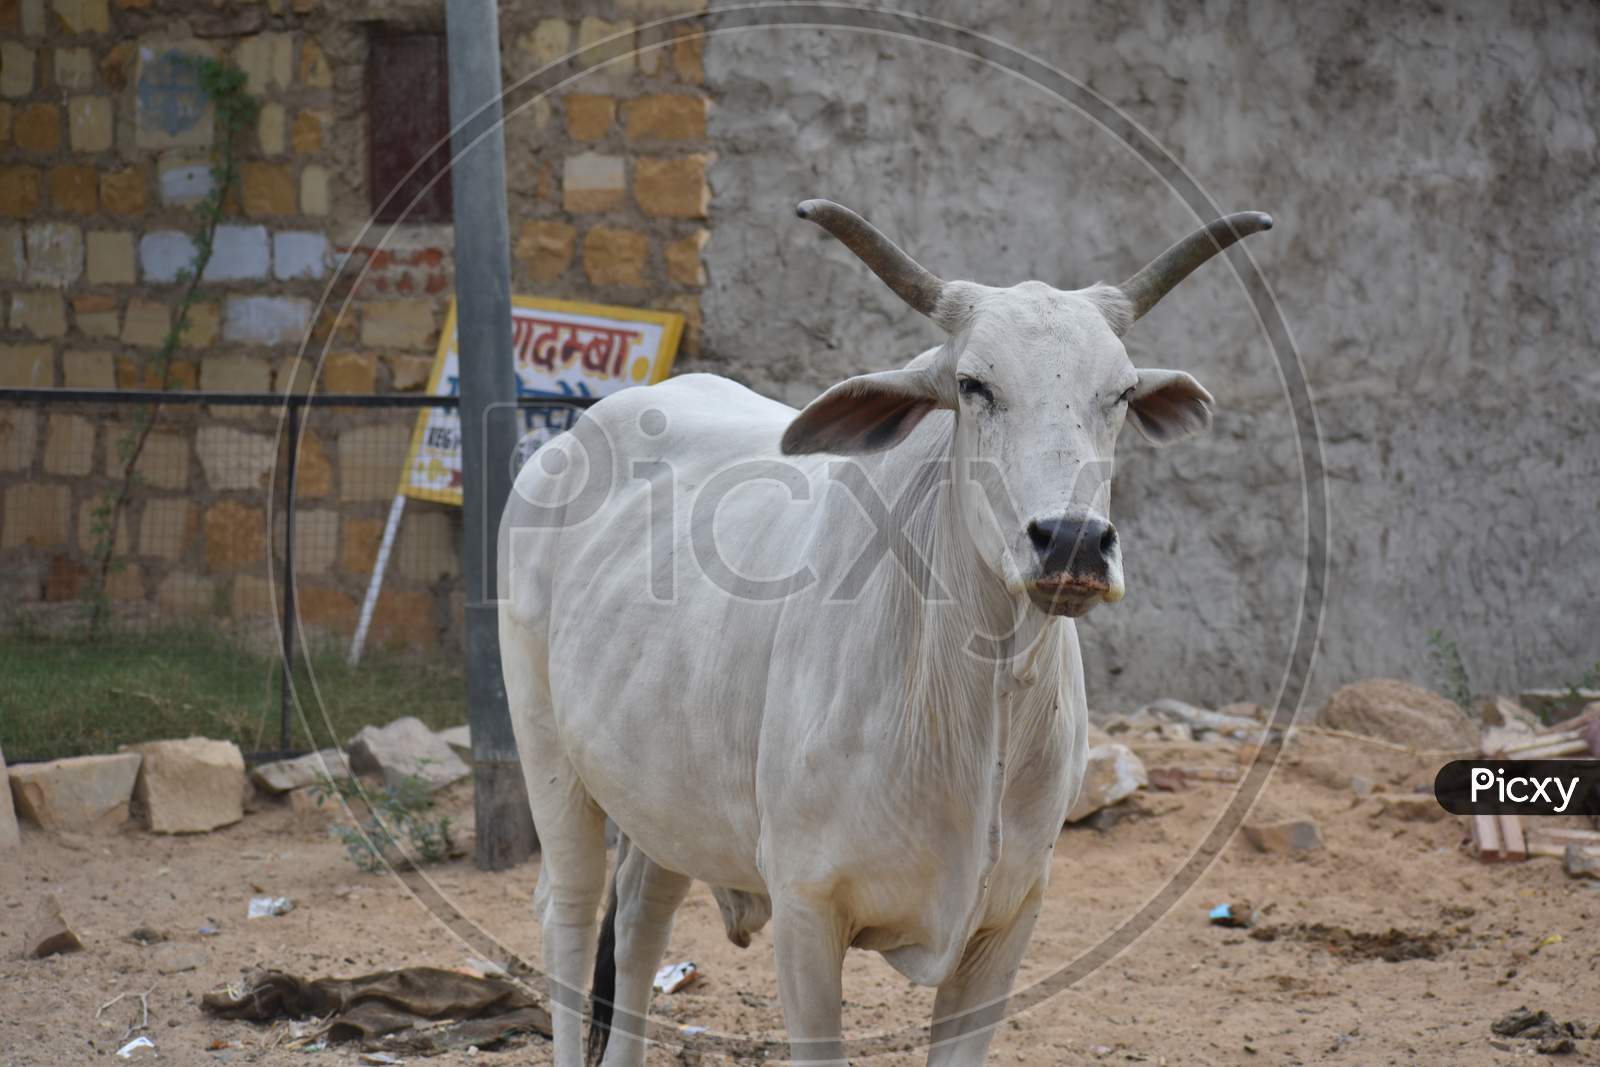 Cows Are Abundance On The Road Of Jaisalmer